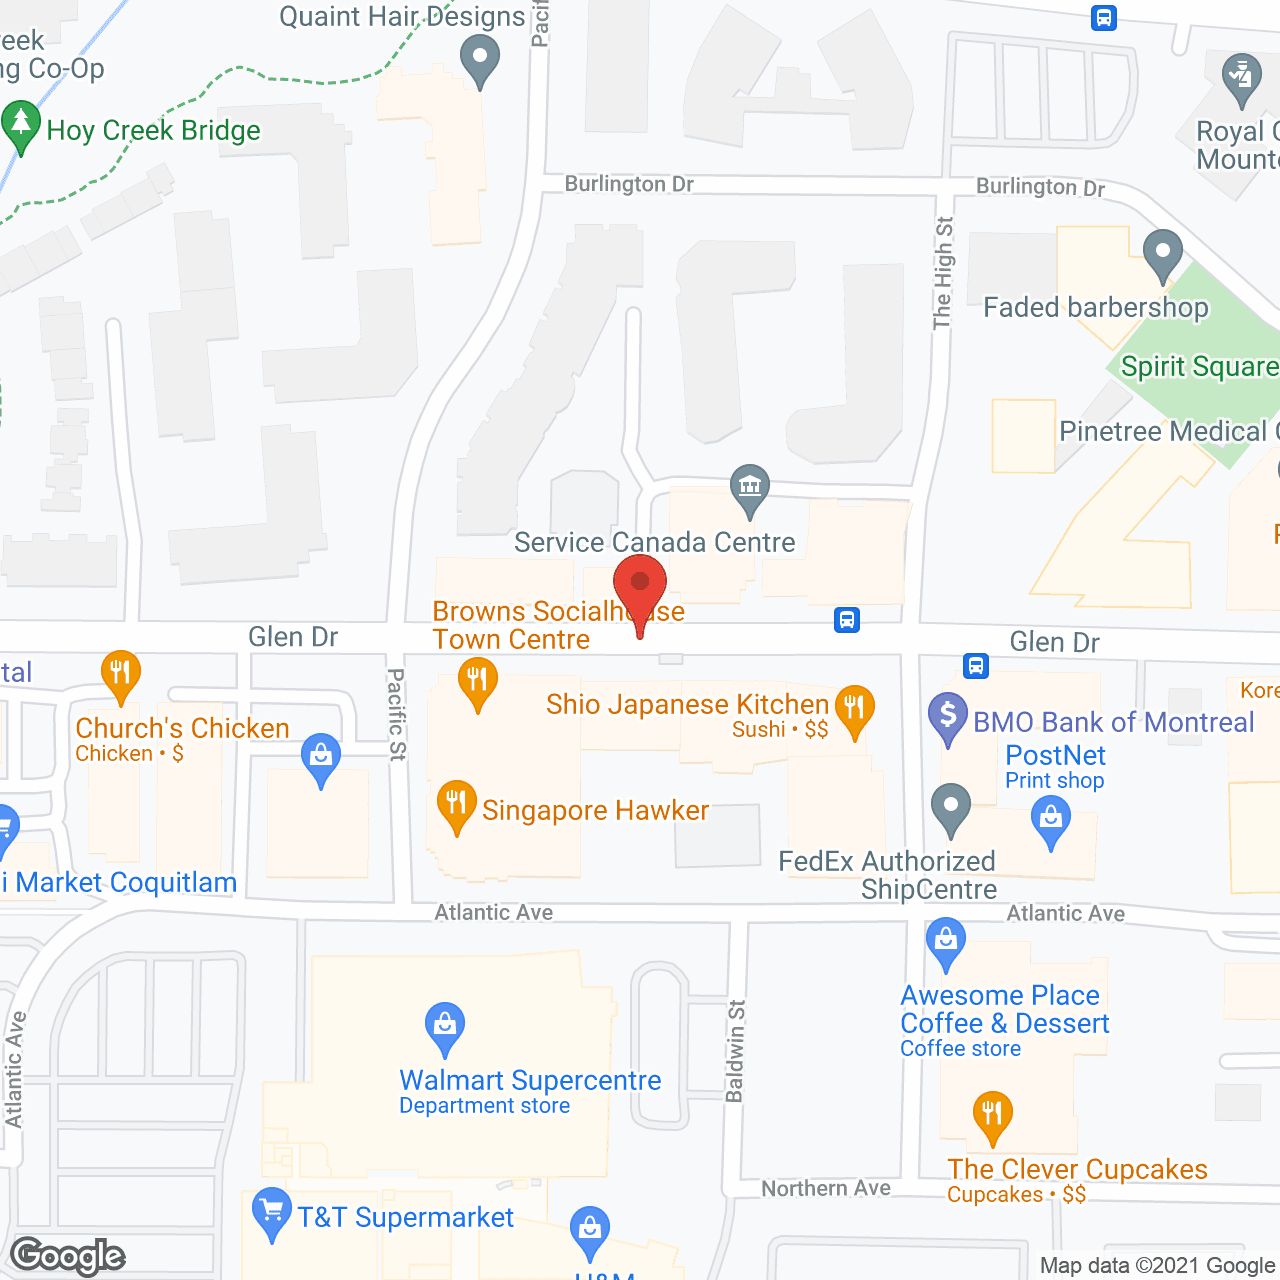 Hoy Creek Housing Co-Op in google map